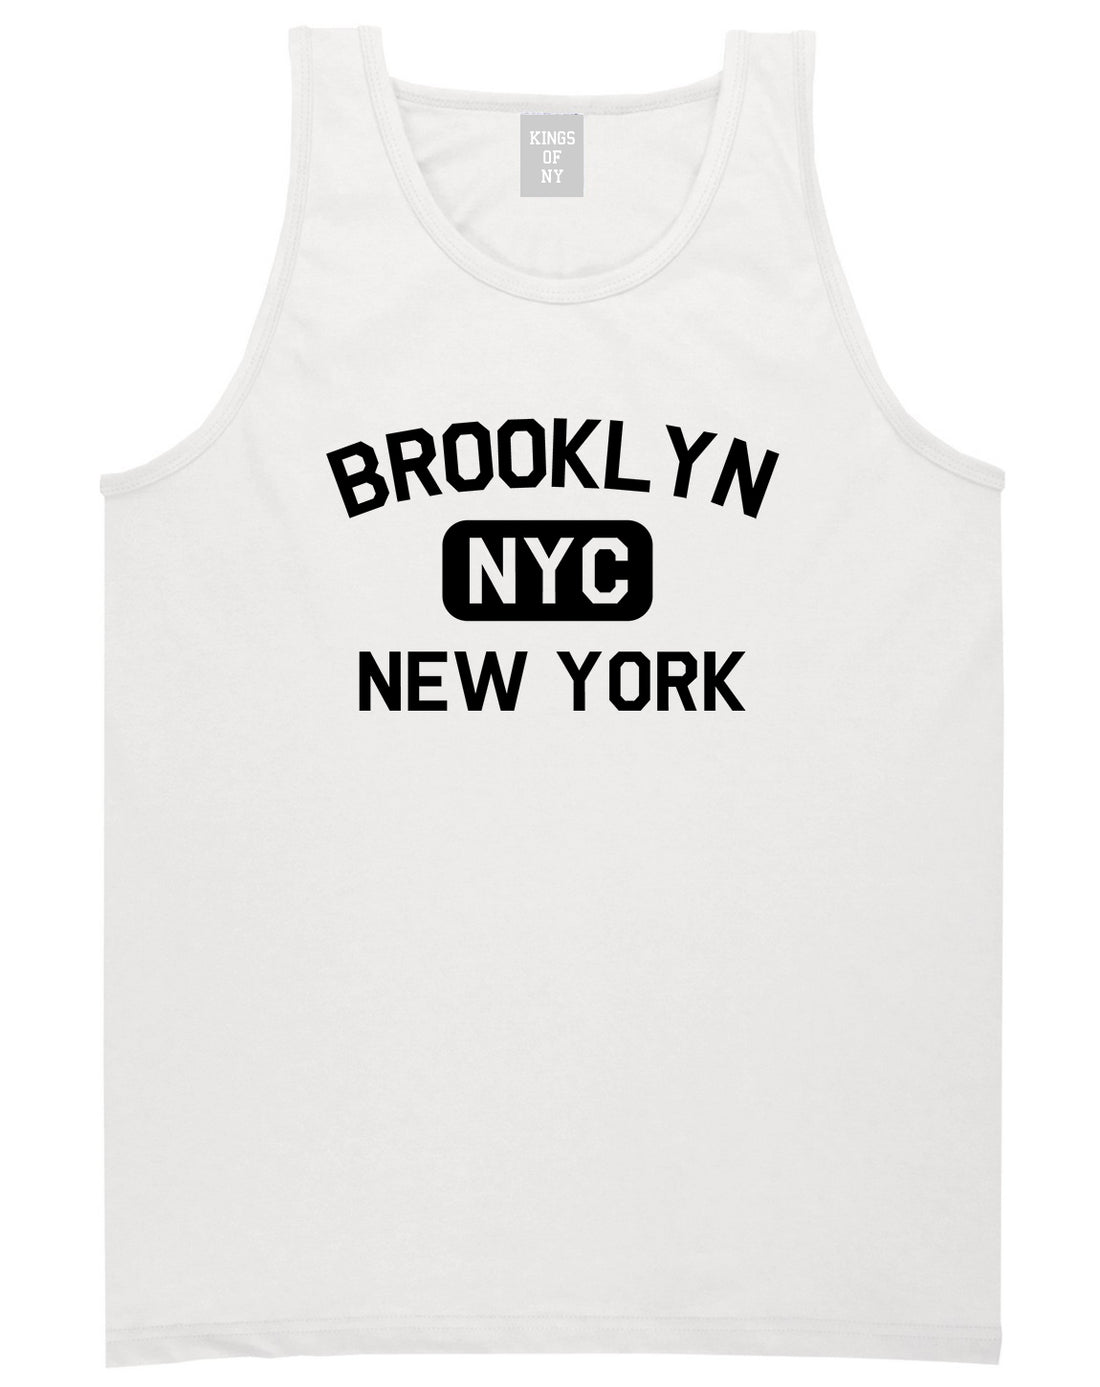 Brooklyn Gym NYC New York Mens Tank Top T-Shirt White